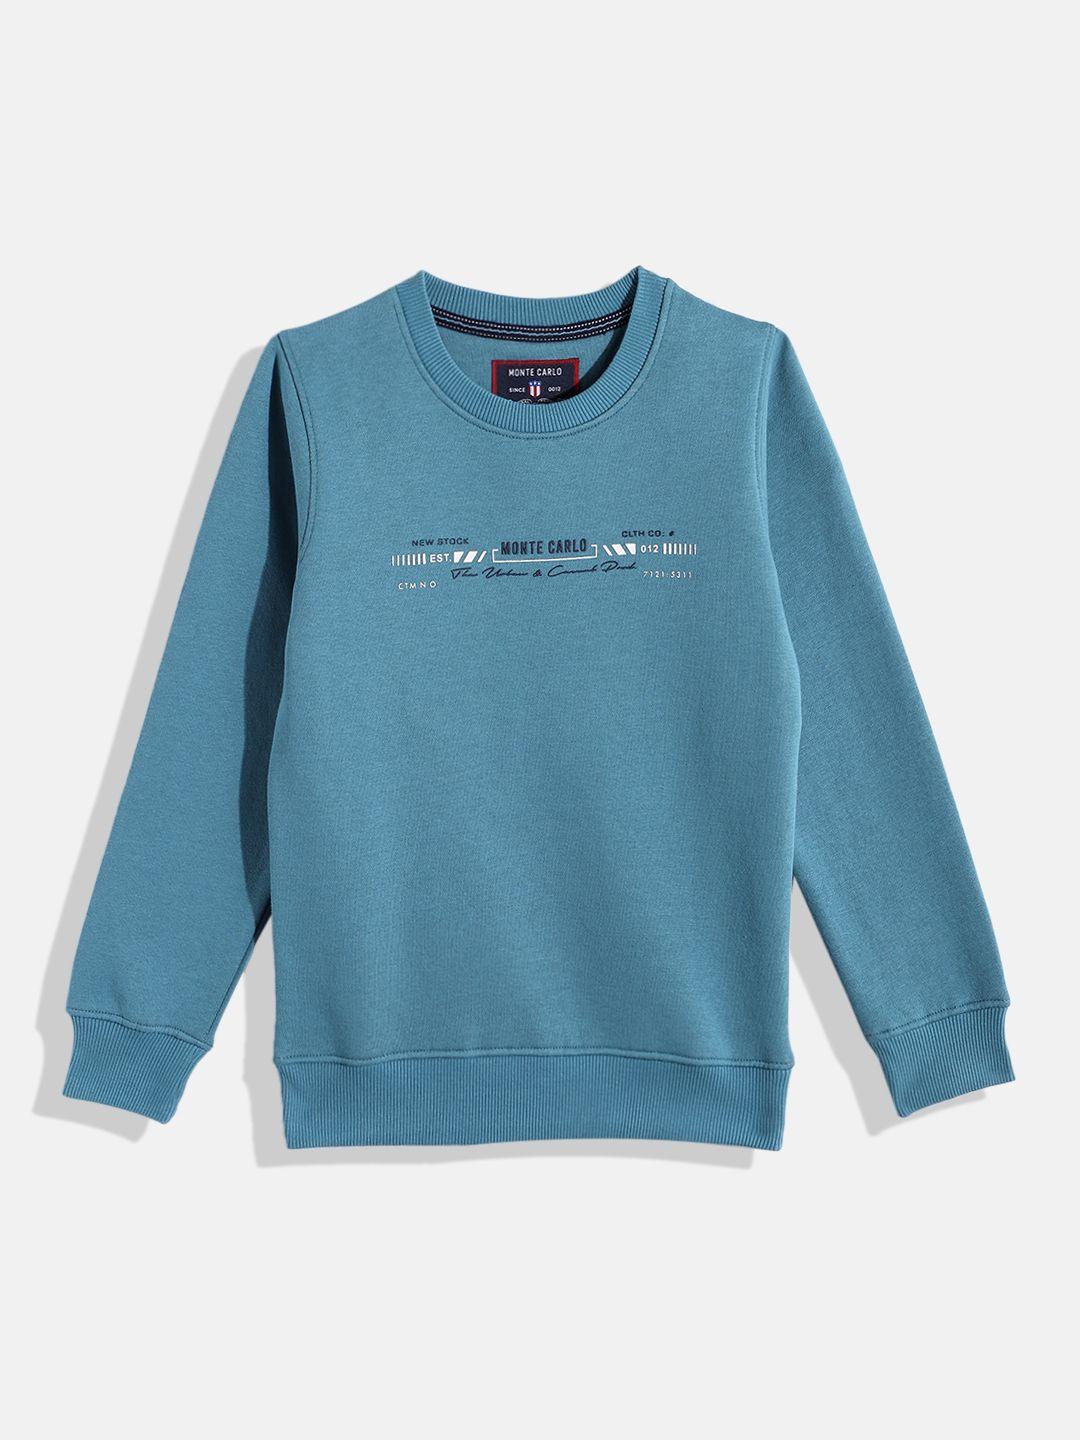 monte carlo boys printed sweatshirt